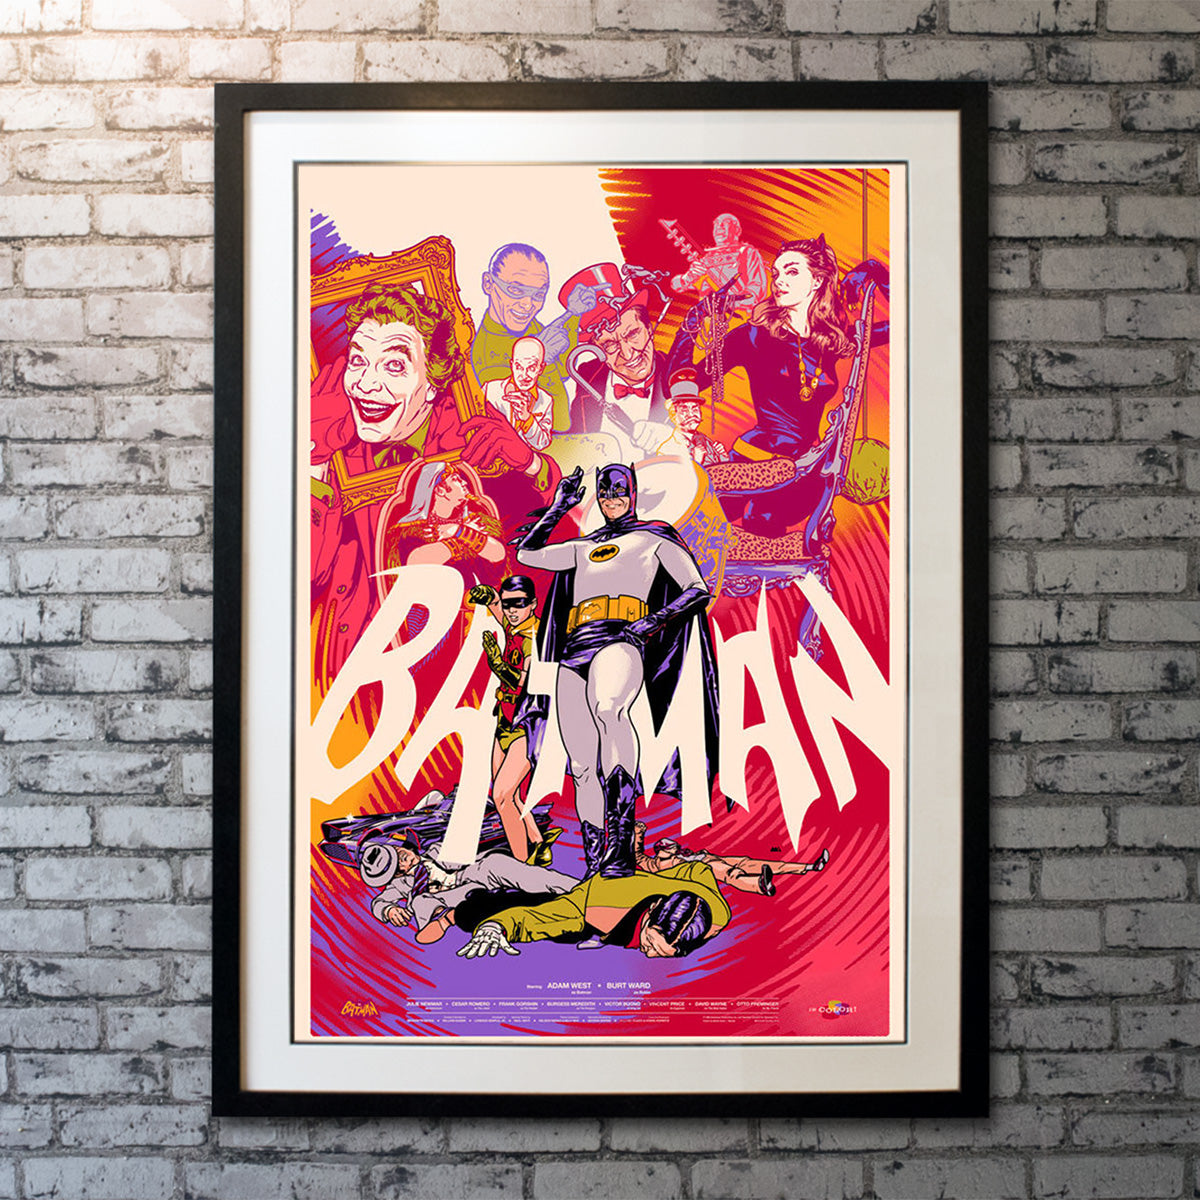 Original Movie Poster of Batman (2014)